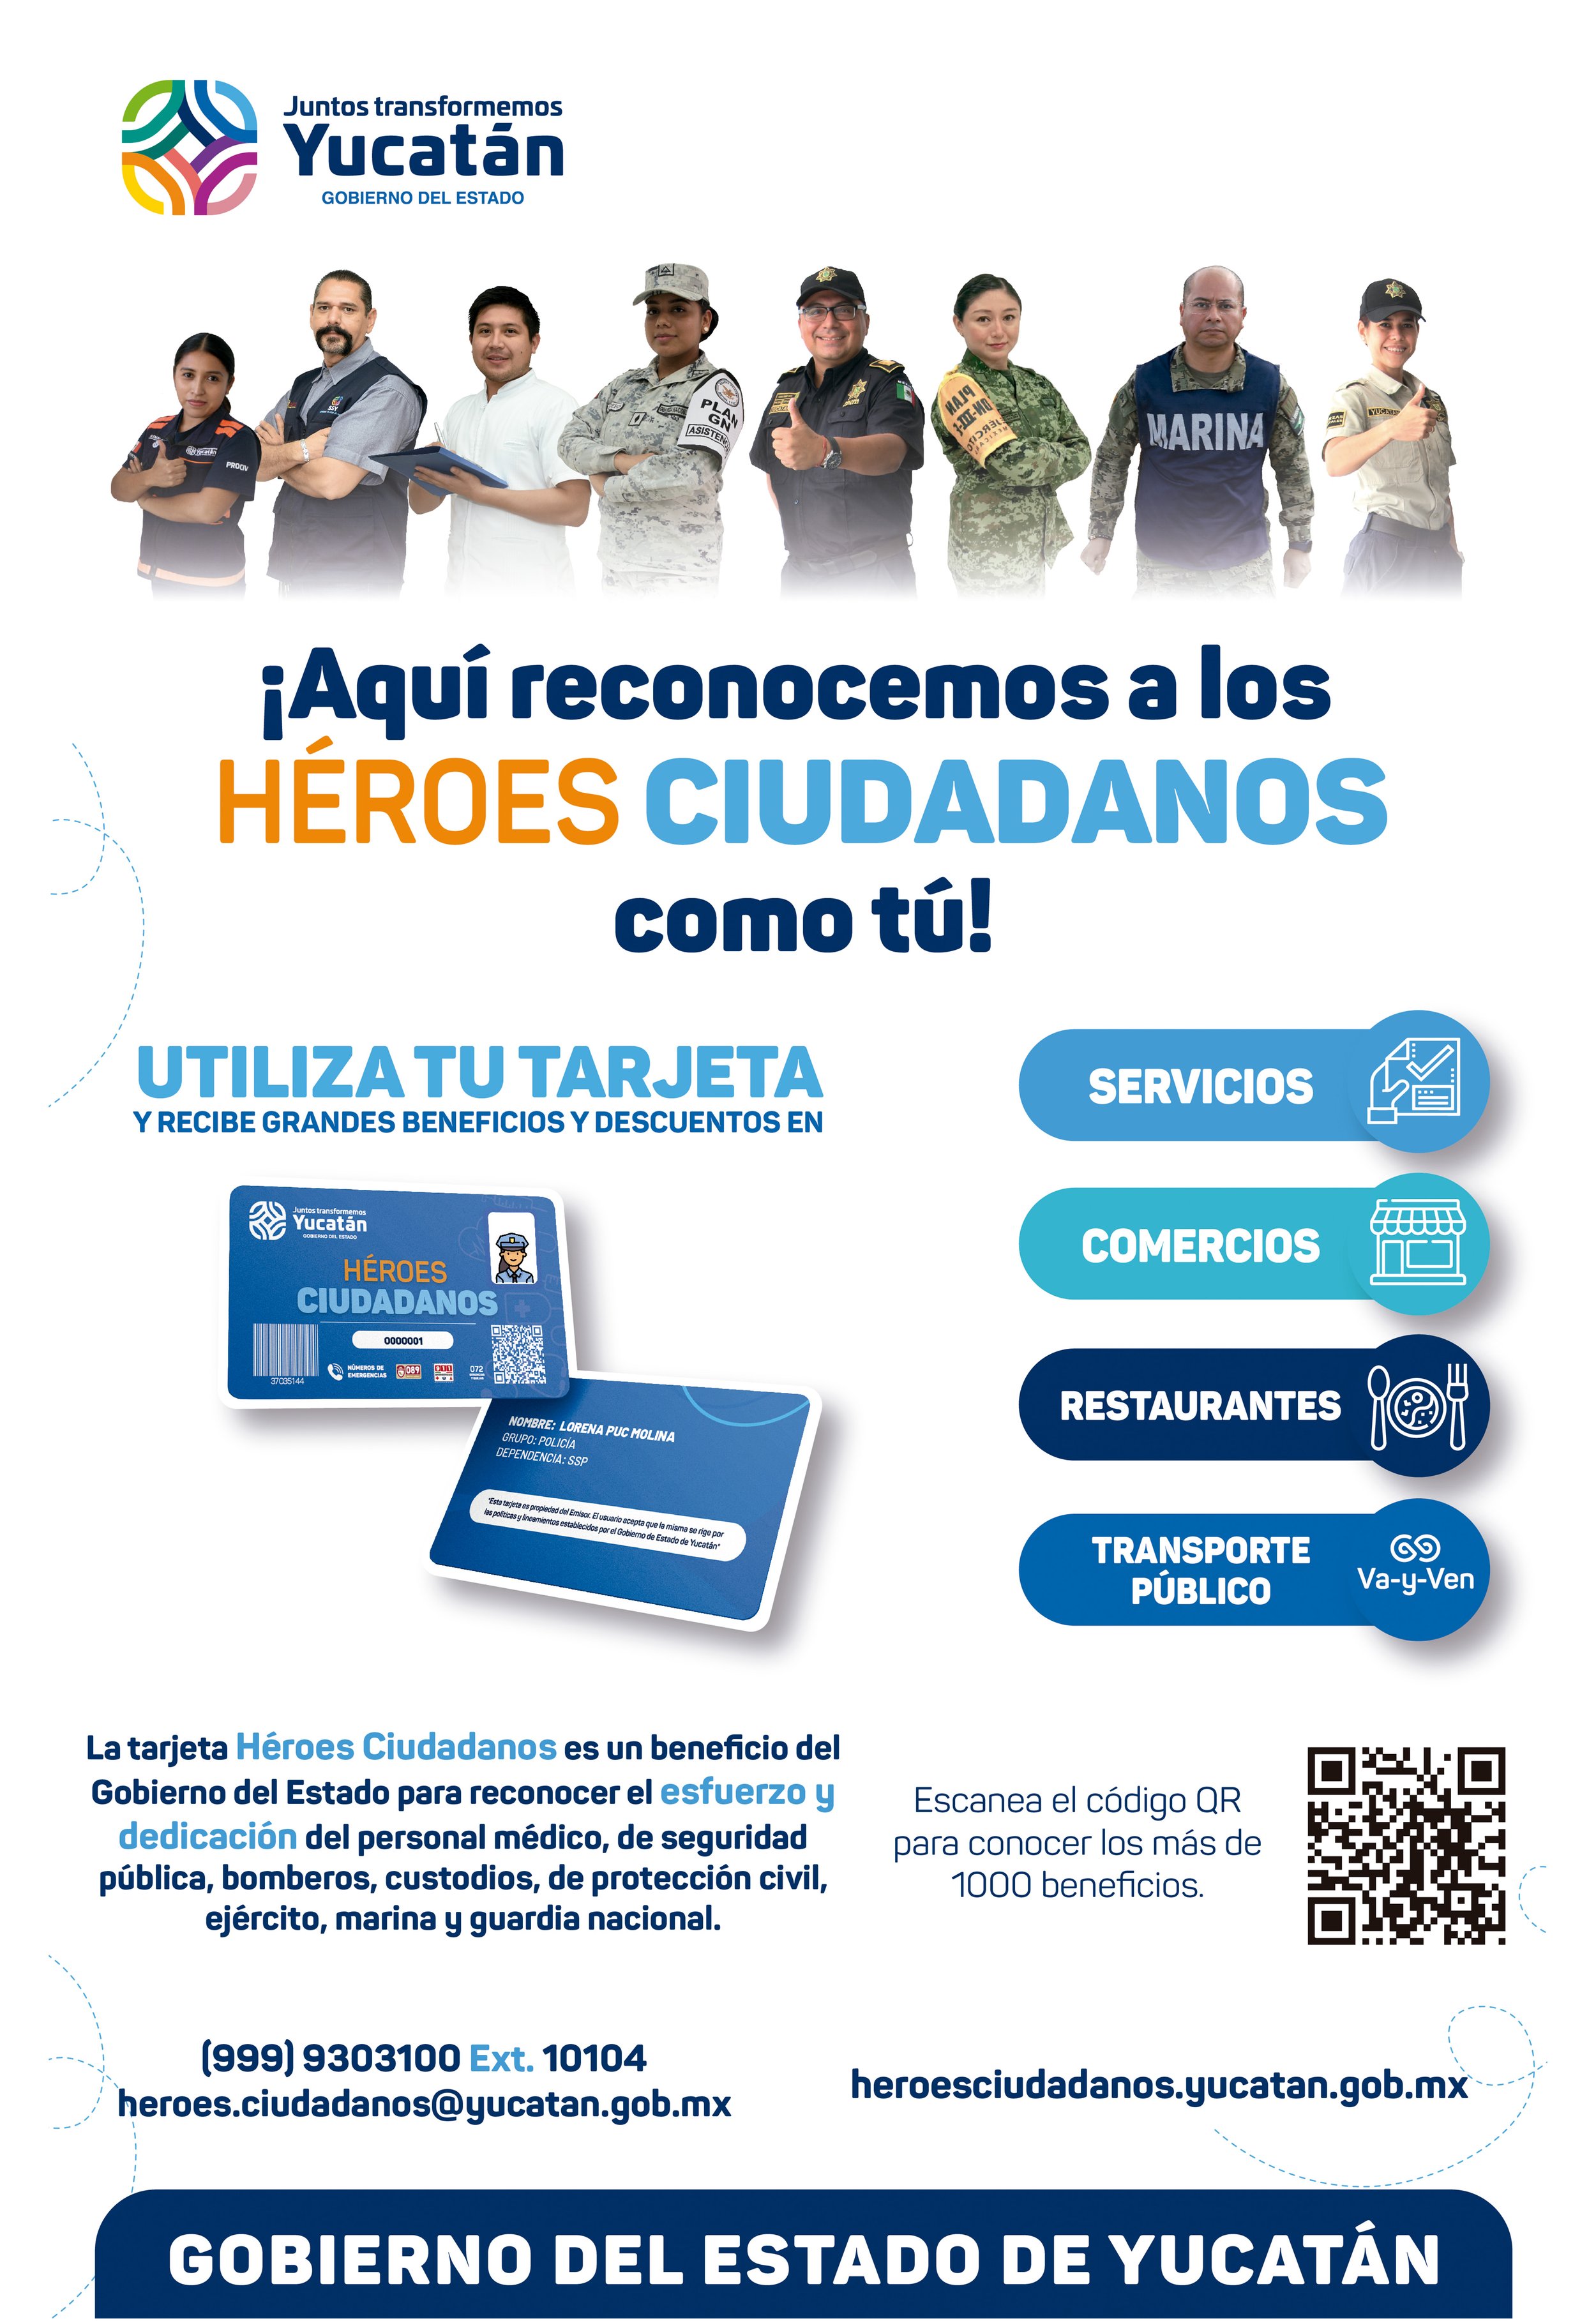 Heroes Ciudadanos Sticker 33 x 48 cms.jpg